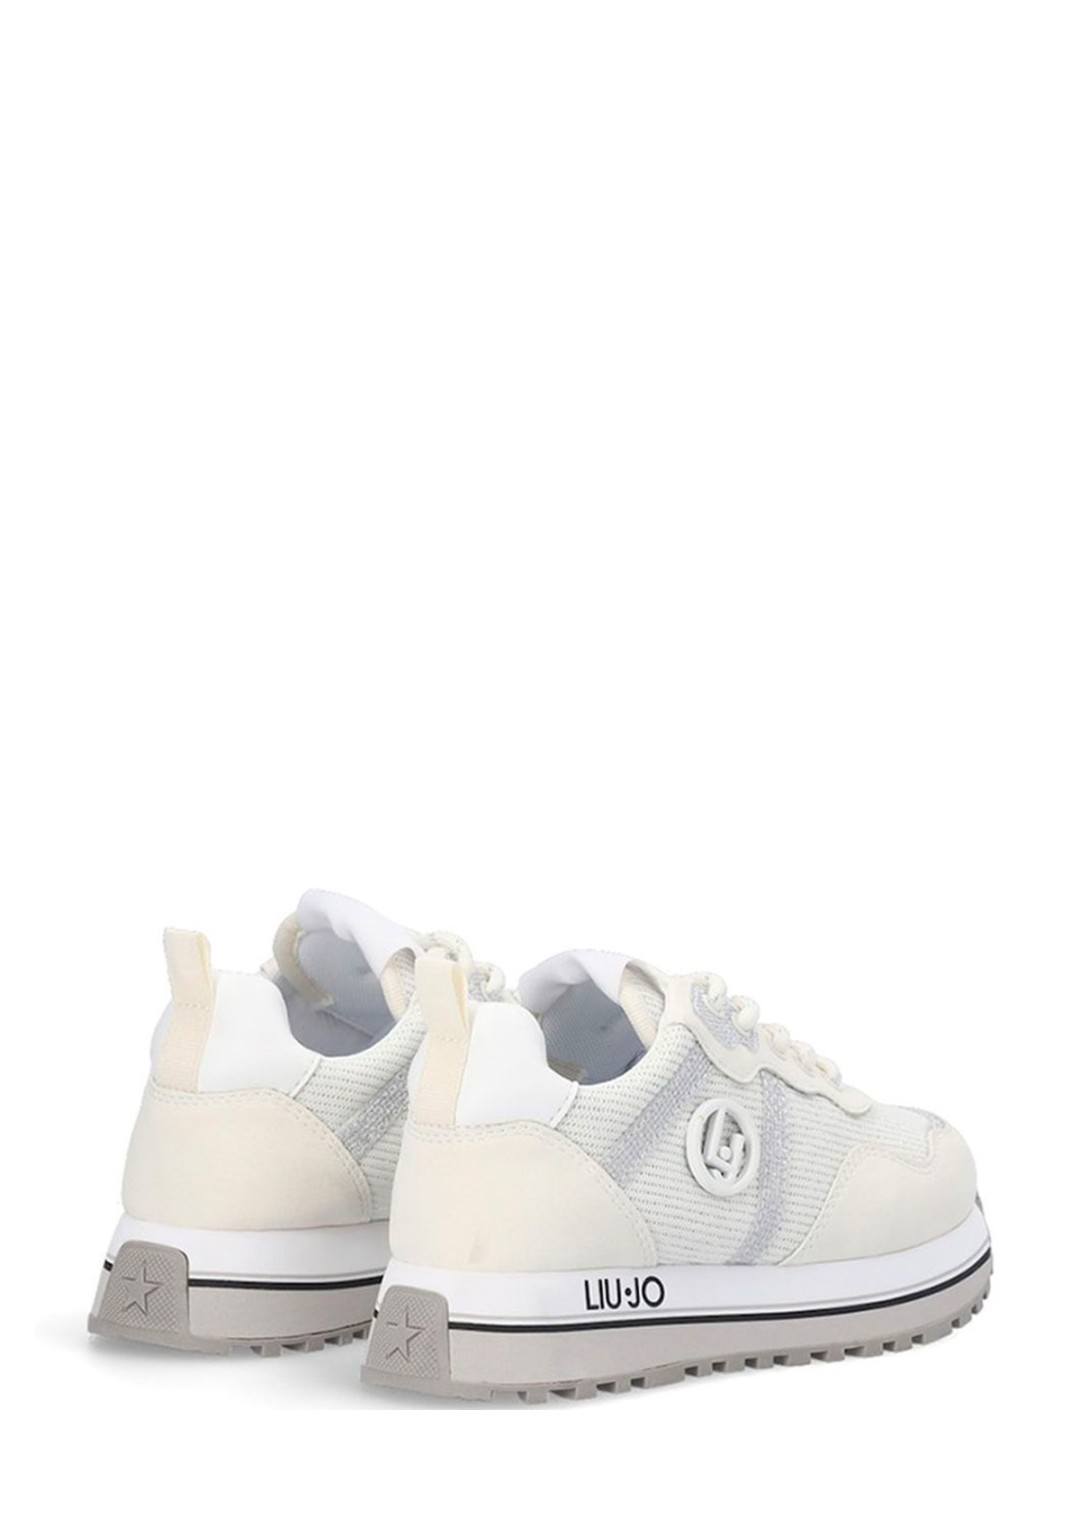 LIU JO - Sneaker Lamè - Bambine e ragazze - 4A3315 B